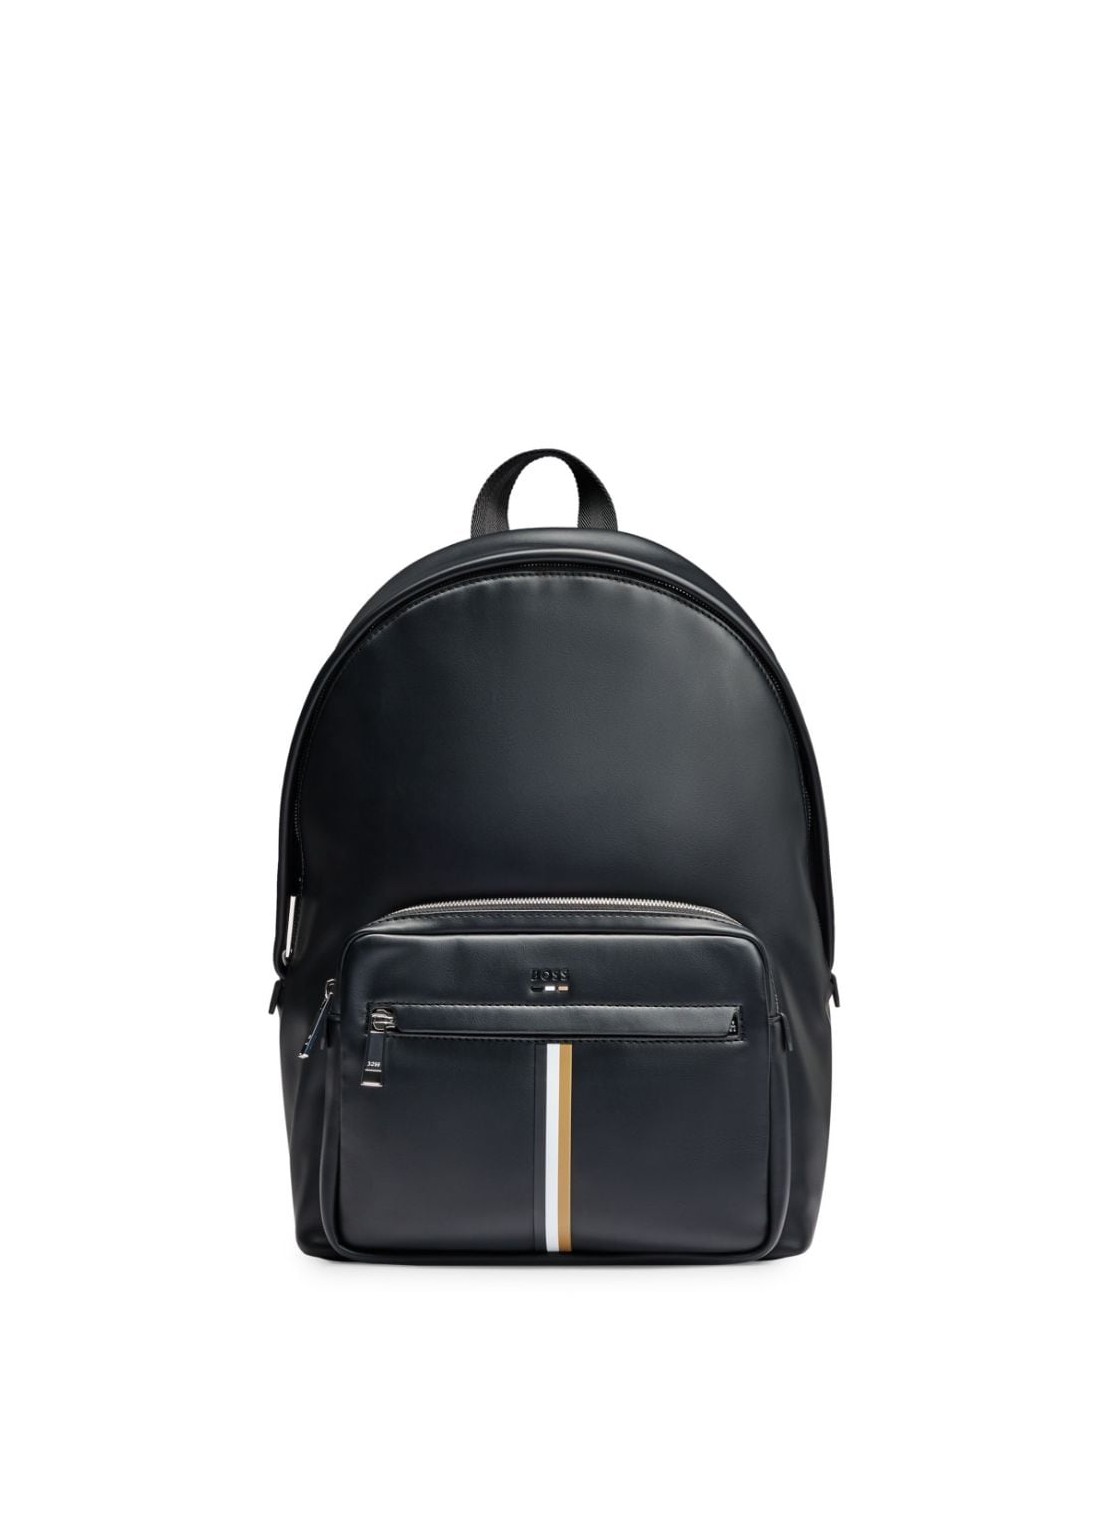 Viaje boss luggage manray_s_backpack - 50516671 001 talla negro
 